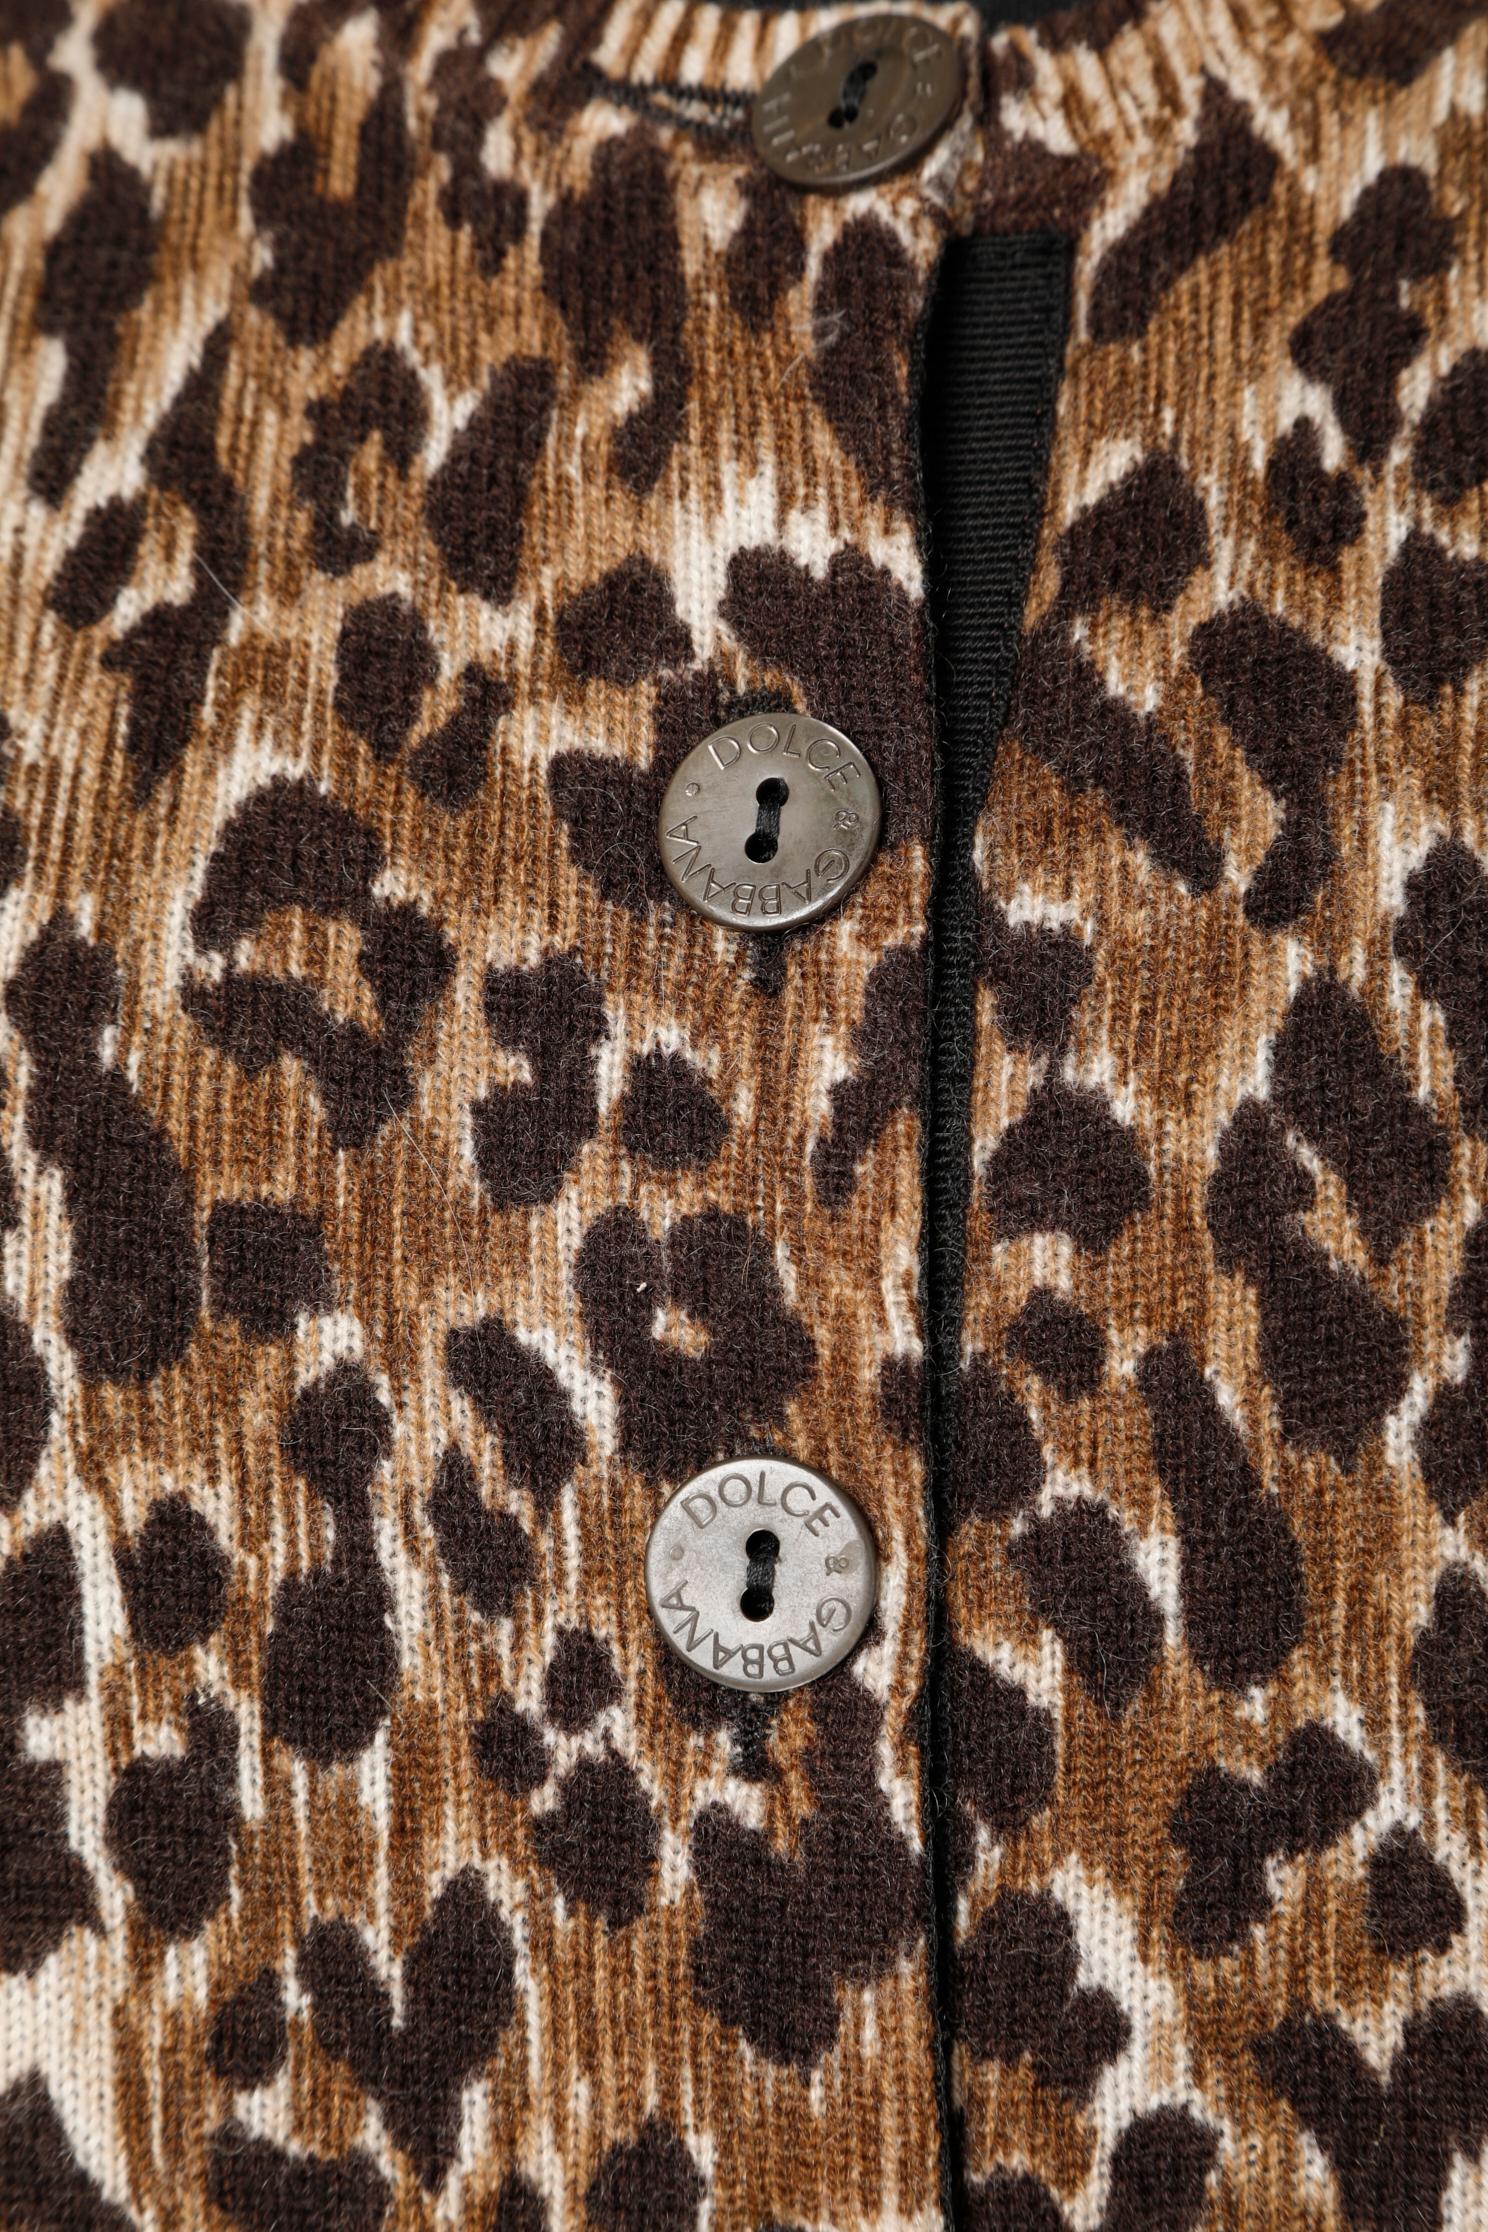 dolce and gabbana leopard sweater